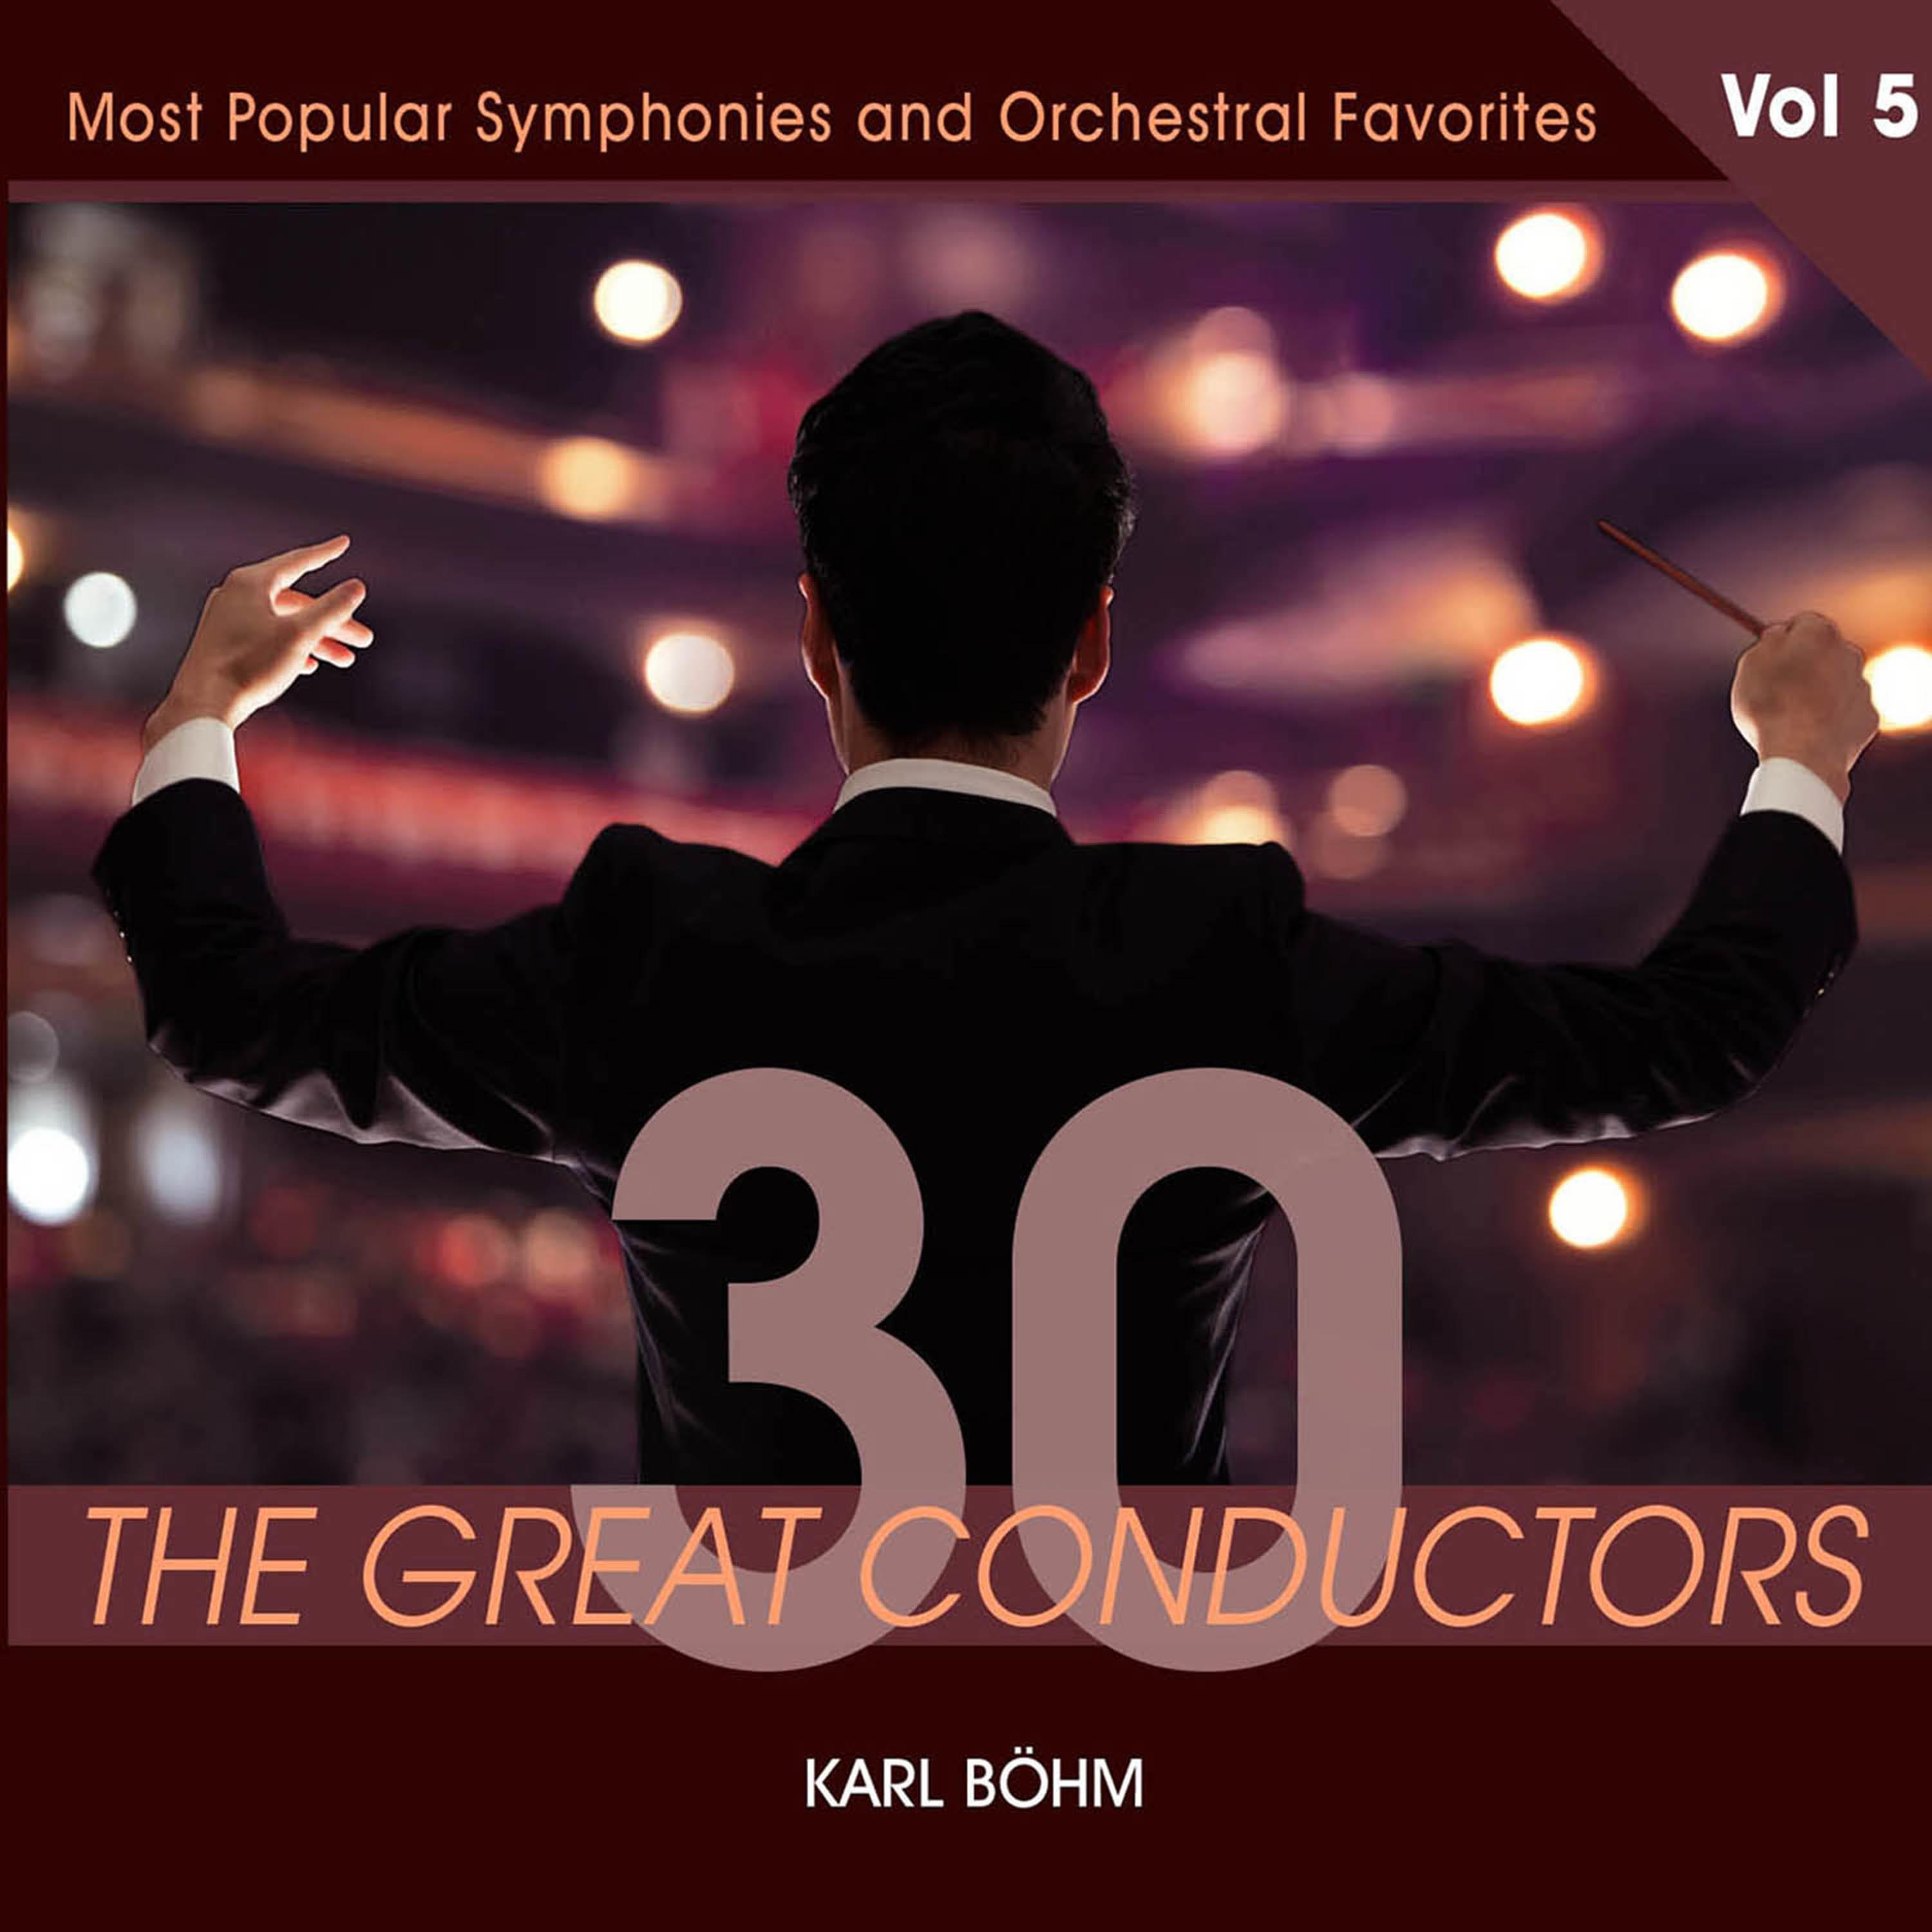 30 Great Conductors  Karl B hm, Vol. 5